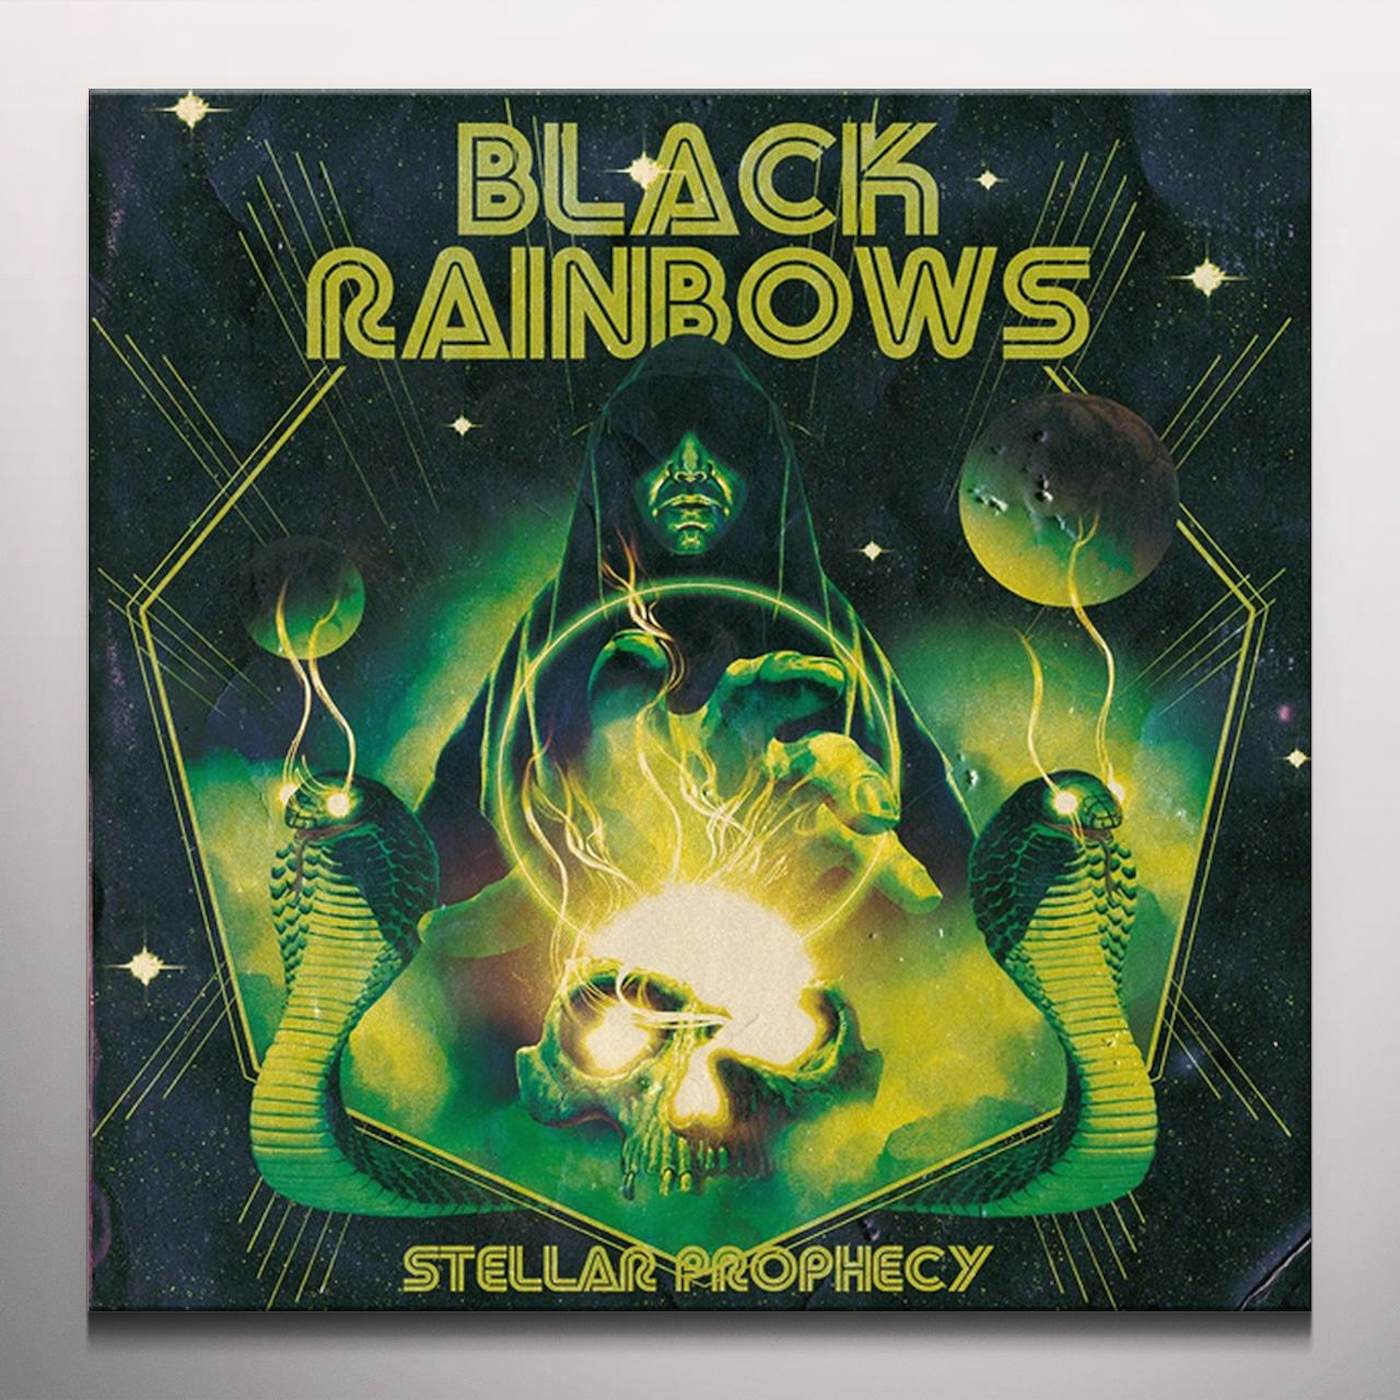 Black Rainbows Stellar Prophecy Vinyl Record